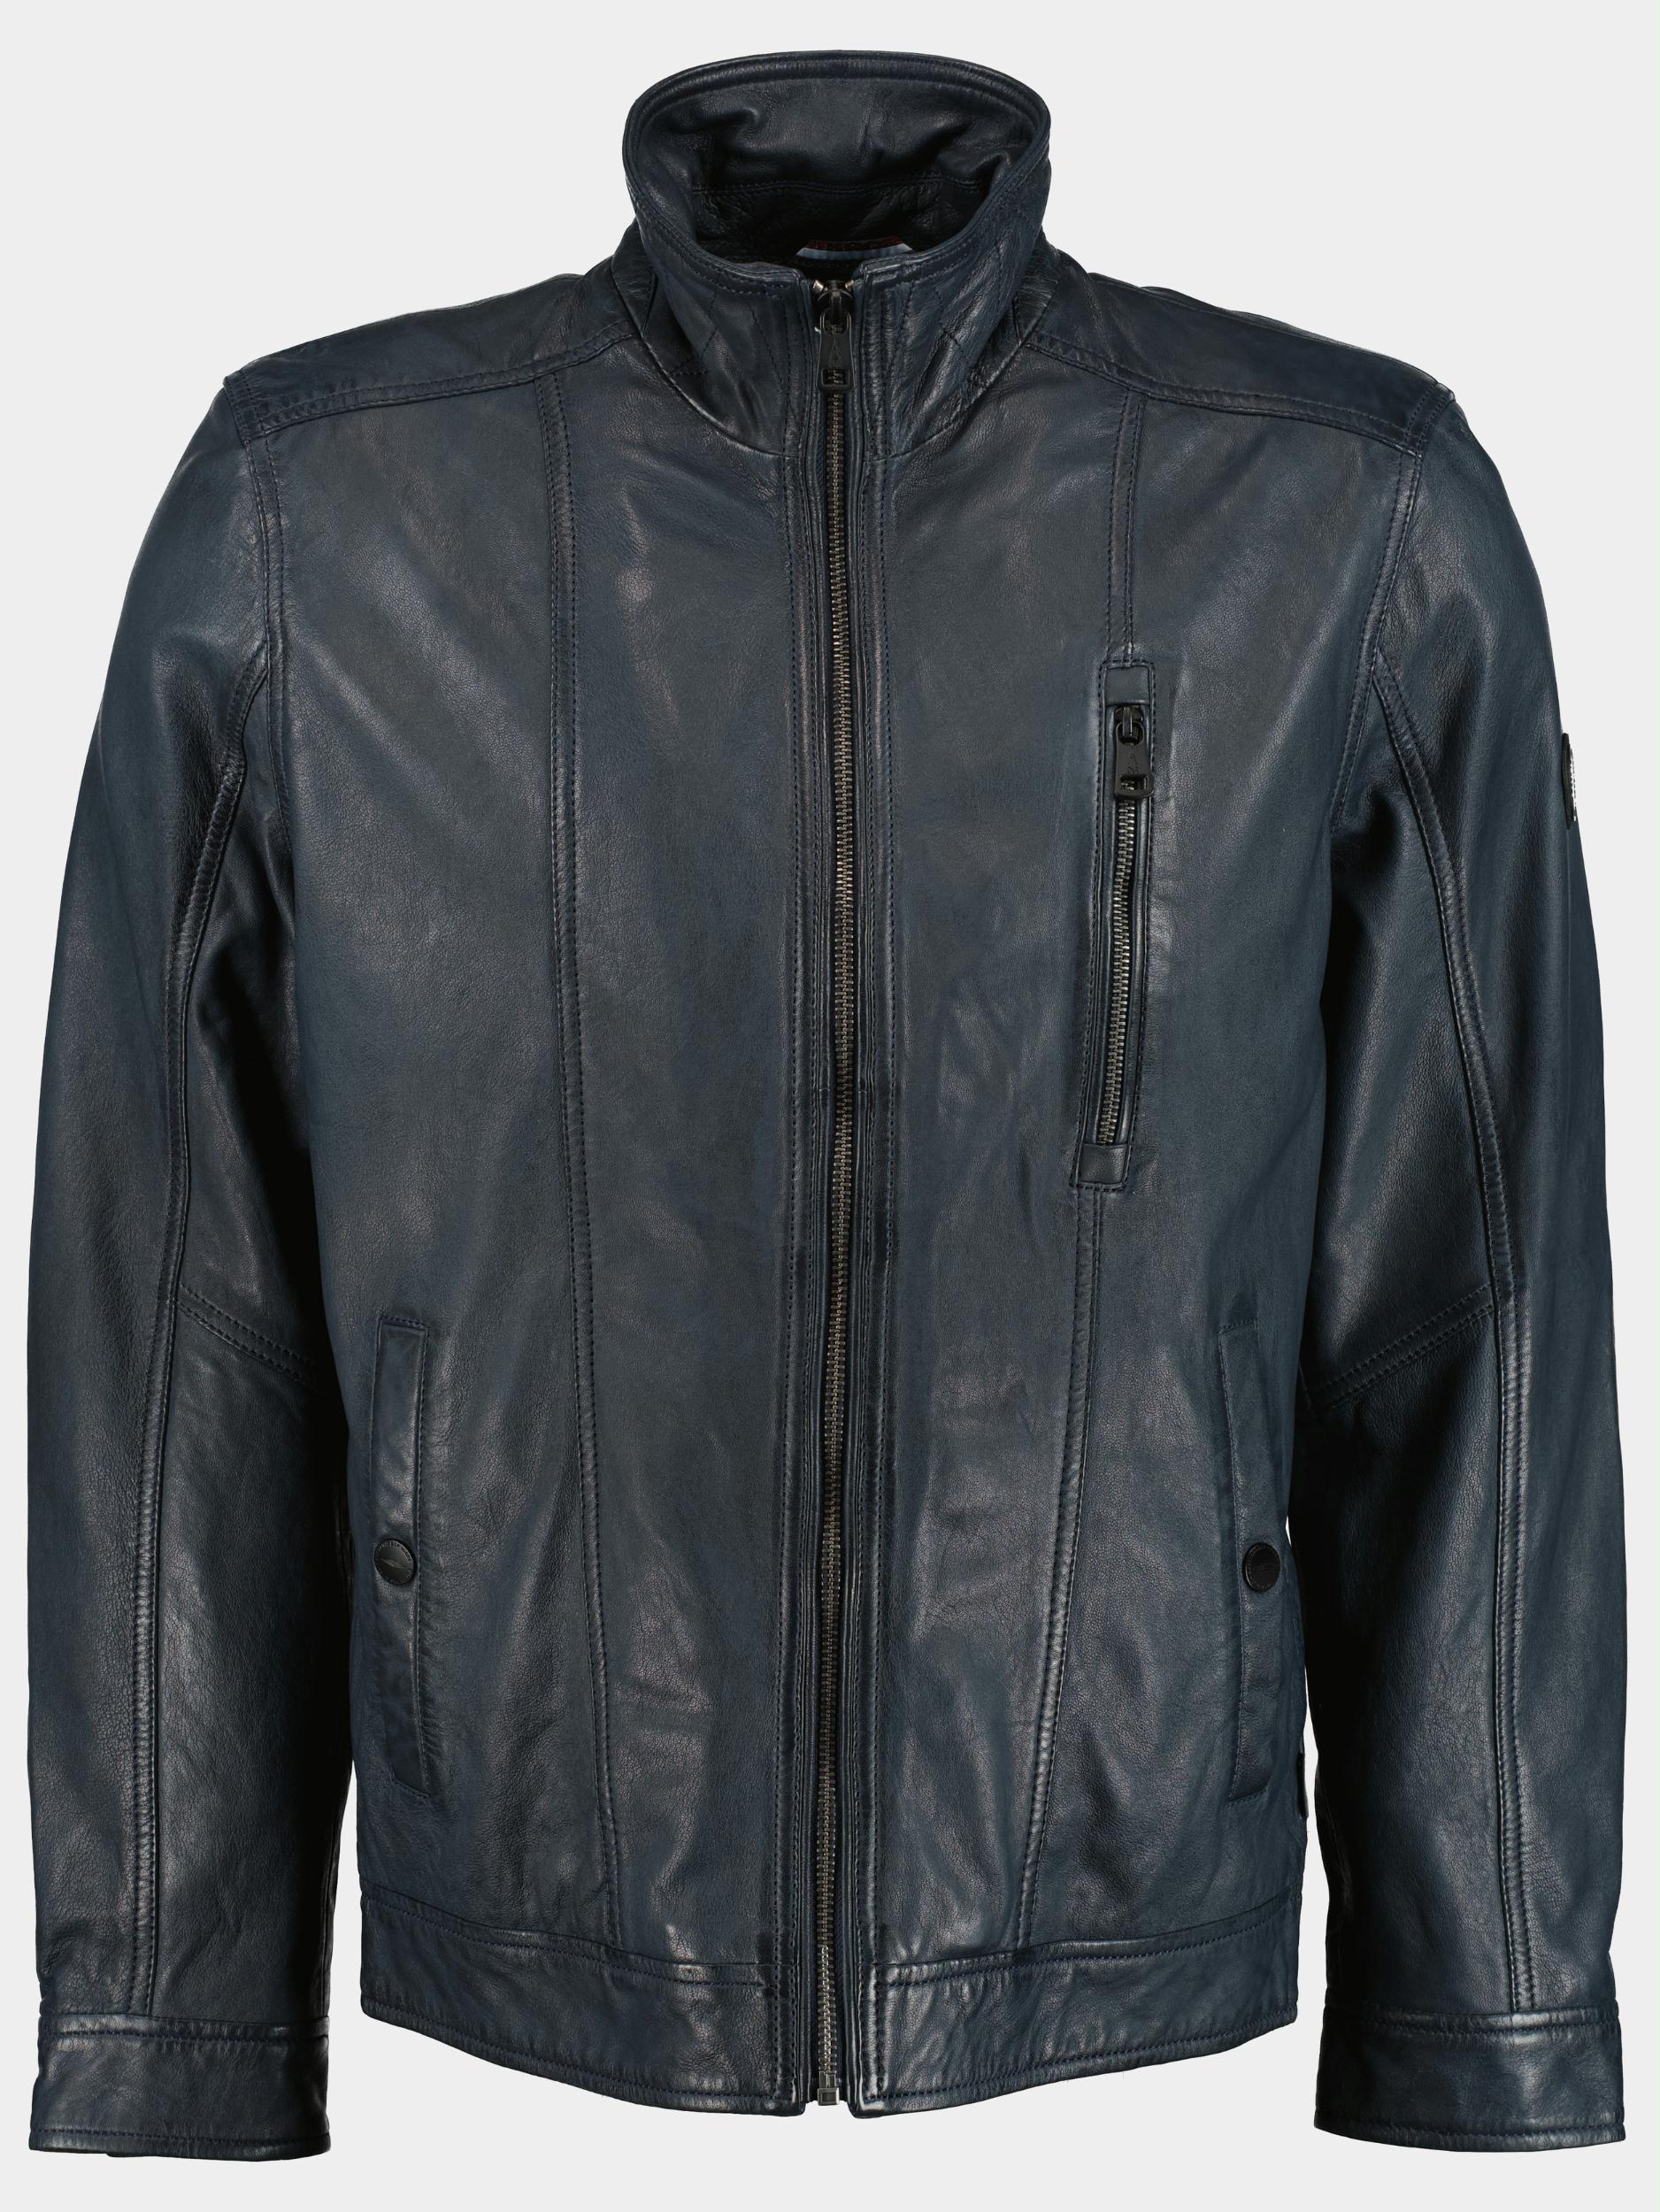 Afbeelding van DNR Lederen jack leather jacket 52349/799